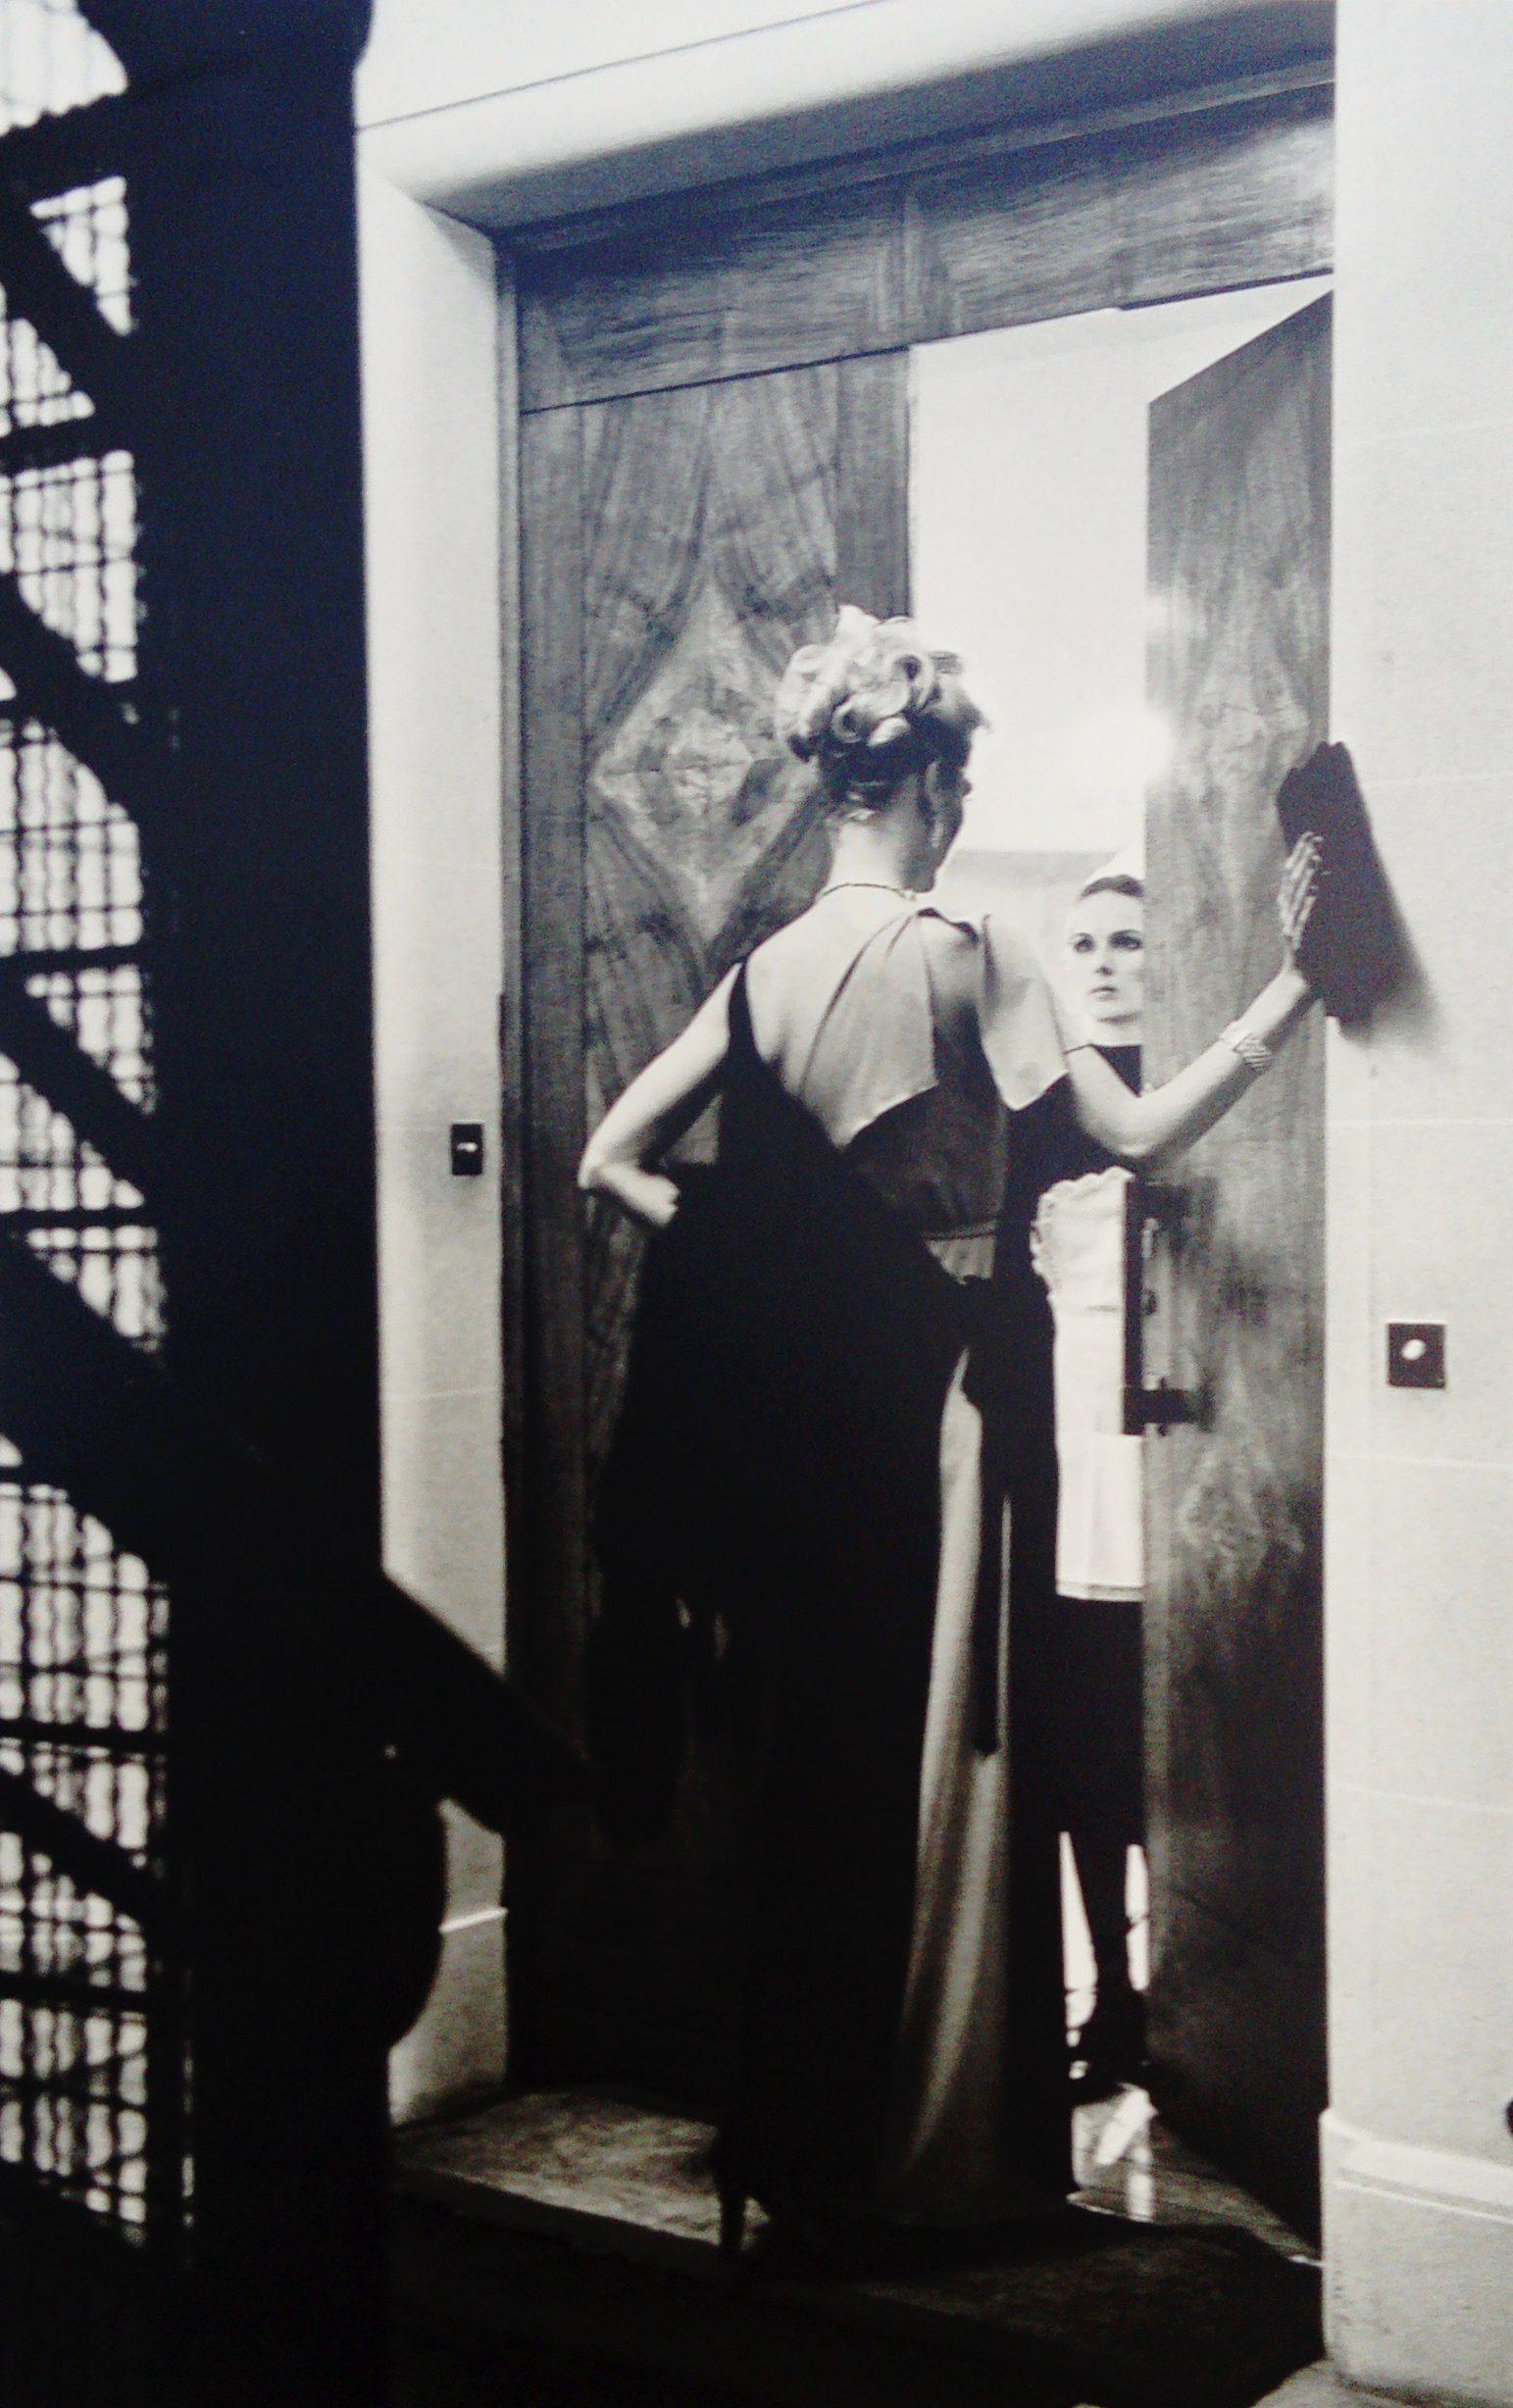 Helmut Newton Black and White Photograph - 16th arrondissement